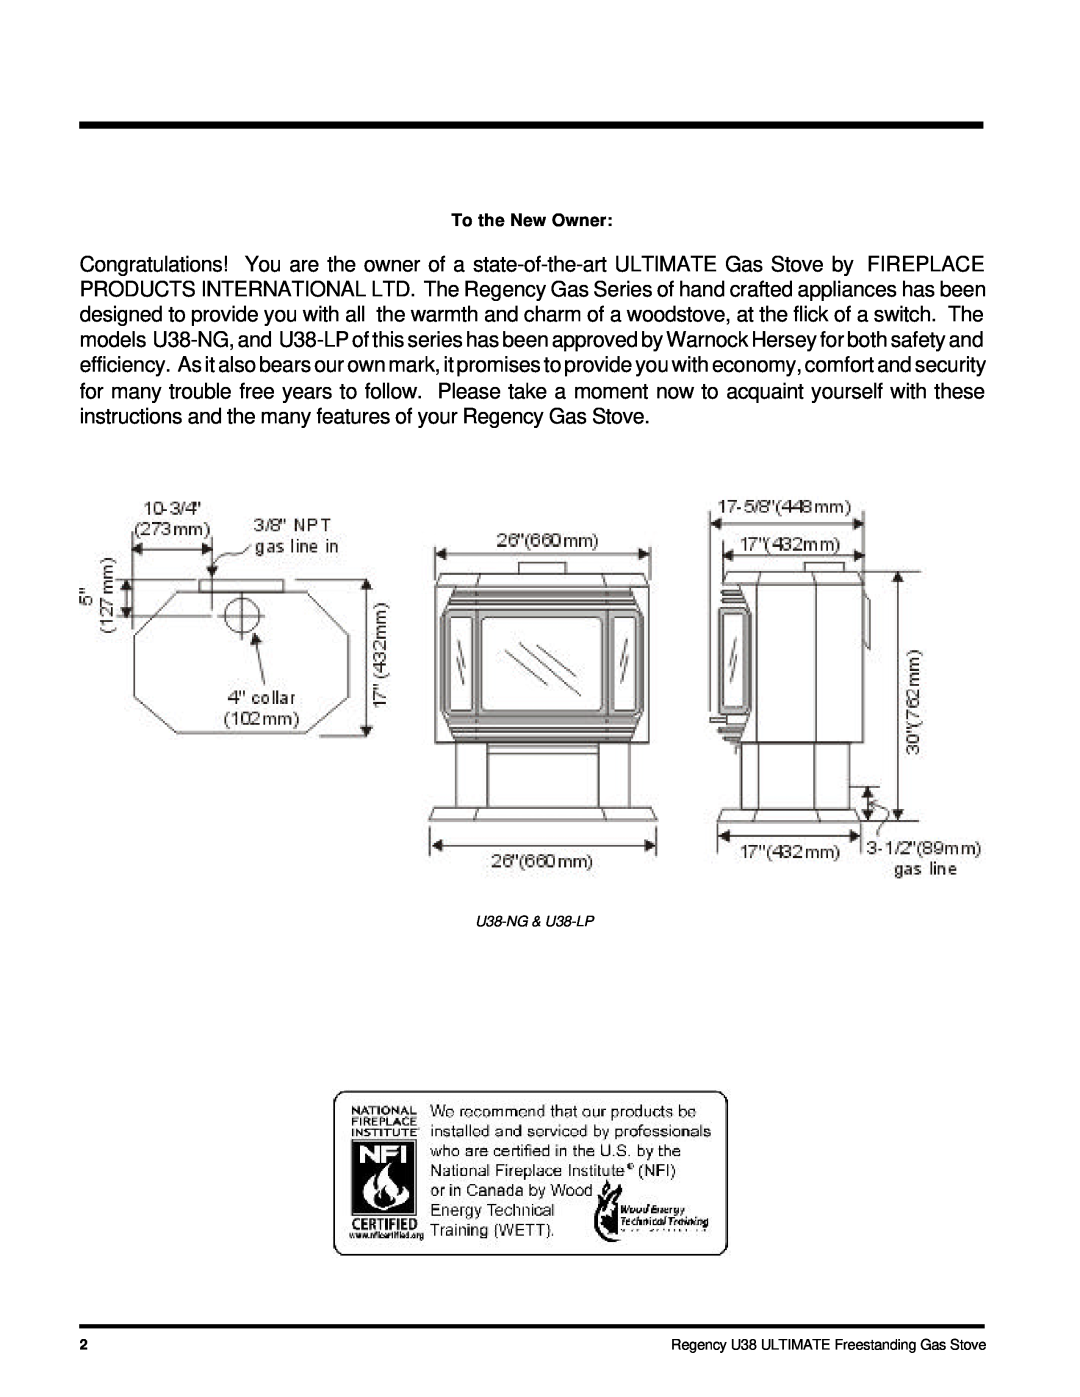 Regency U38-LP, U38-NG installation manual To the New Owner, Regency U38 ULTIMATE Freestanding Gas Stove 